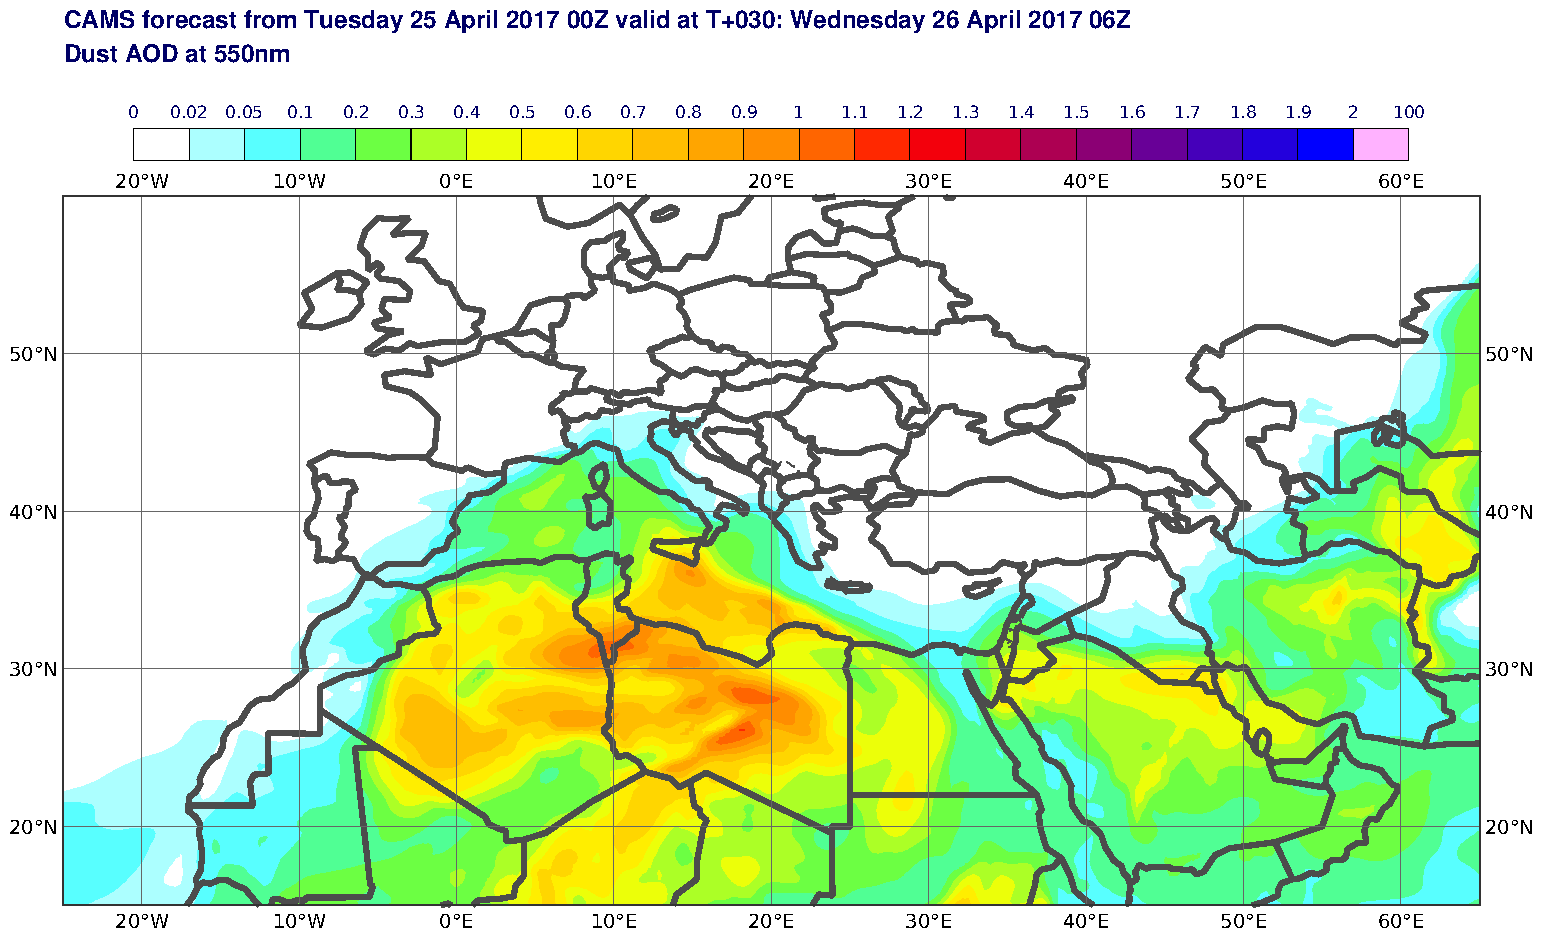 Dust AOD at 550nm valid at T30 - 2017-04-26 06:00